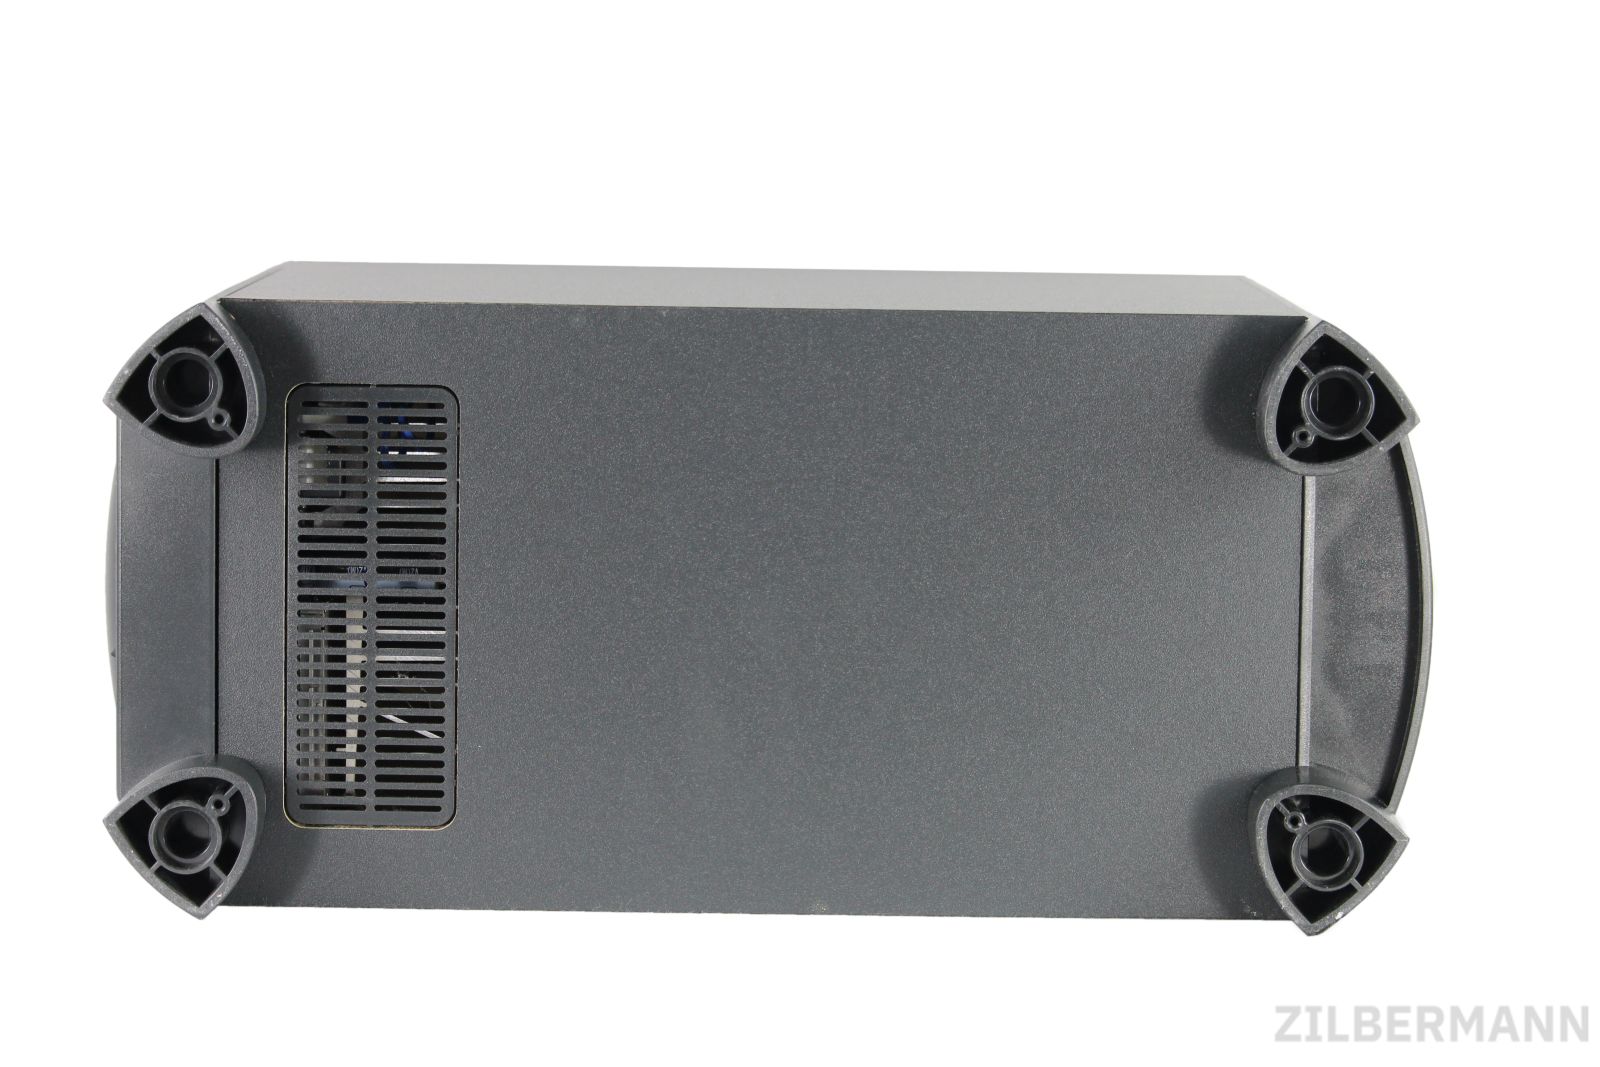 Bose_321_3-2-1_Heimkino-system_Series_III_mit_HDMI_21